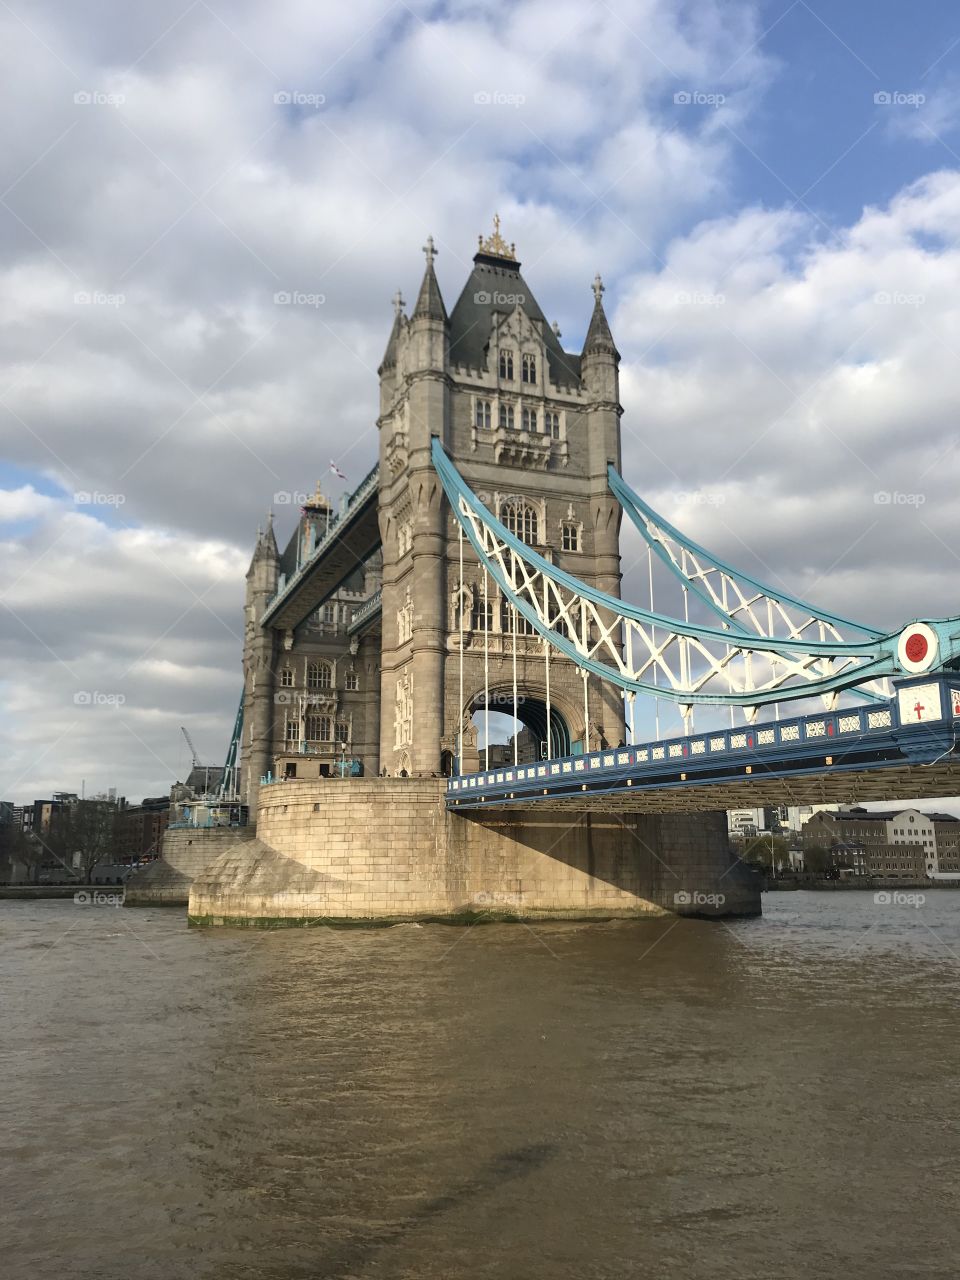 The amazing Tower Bridge in London